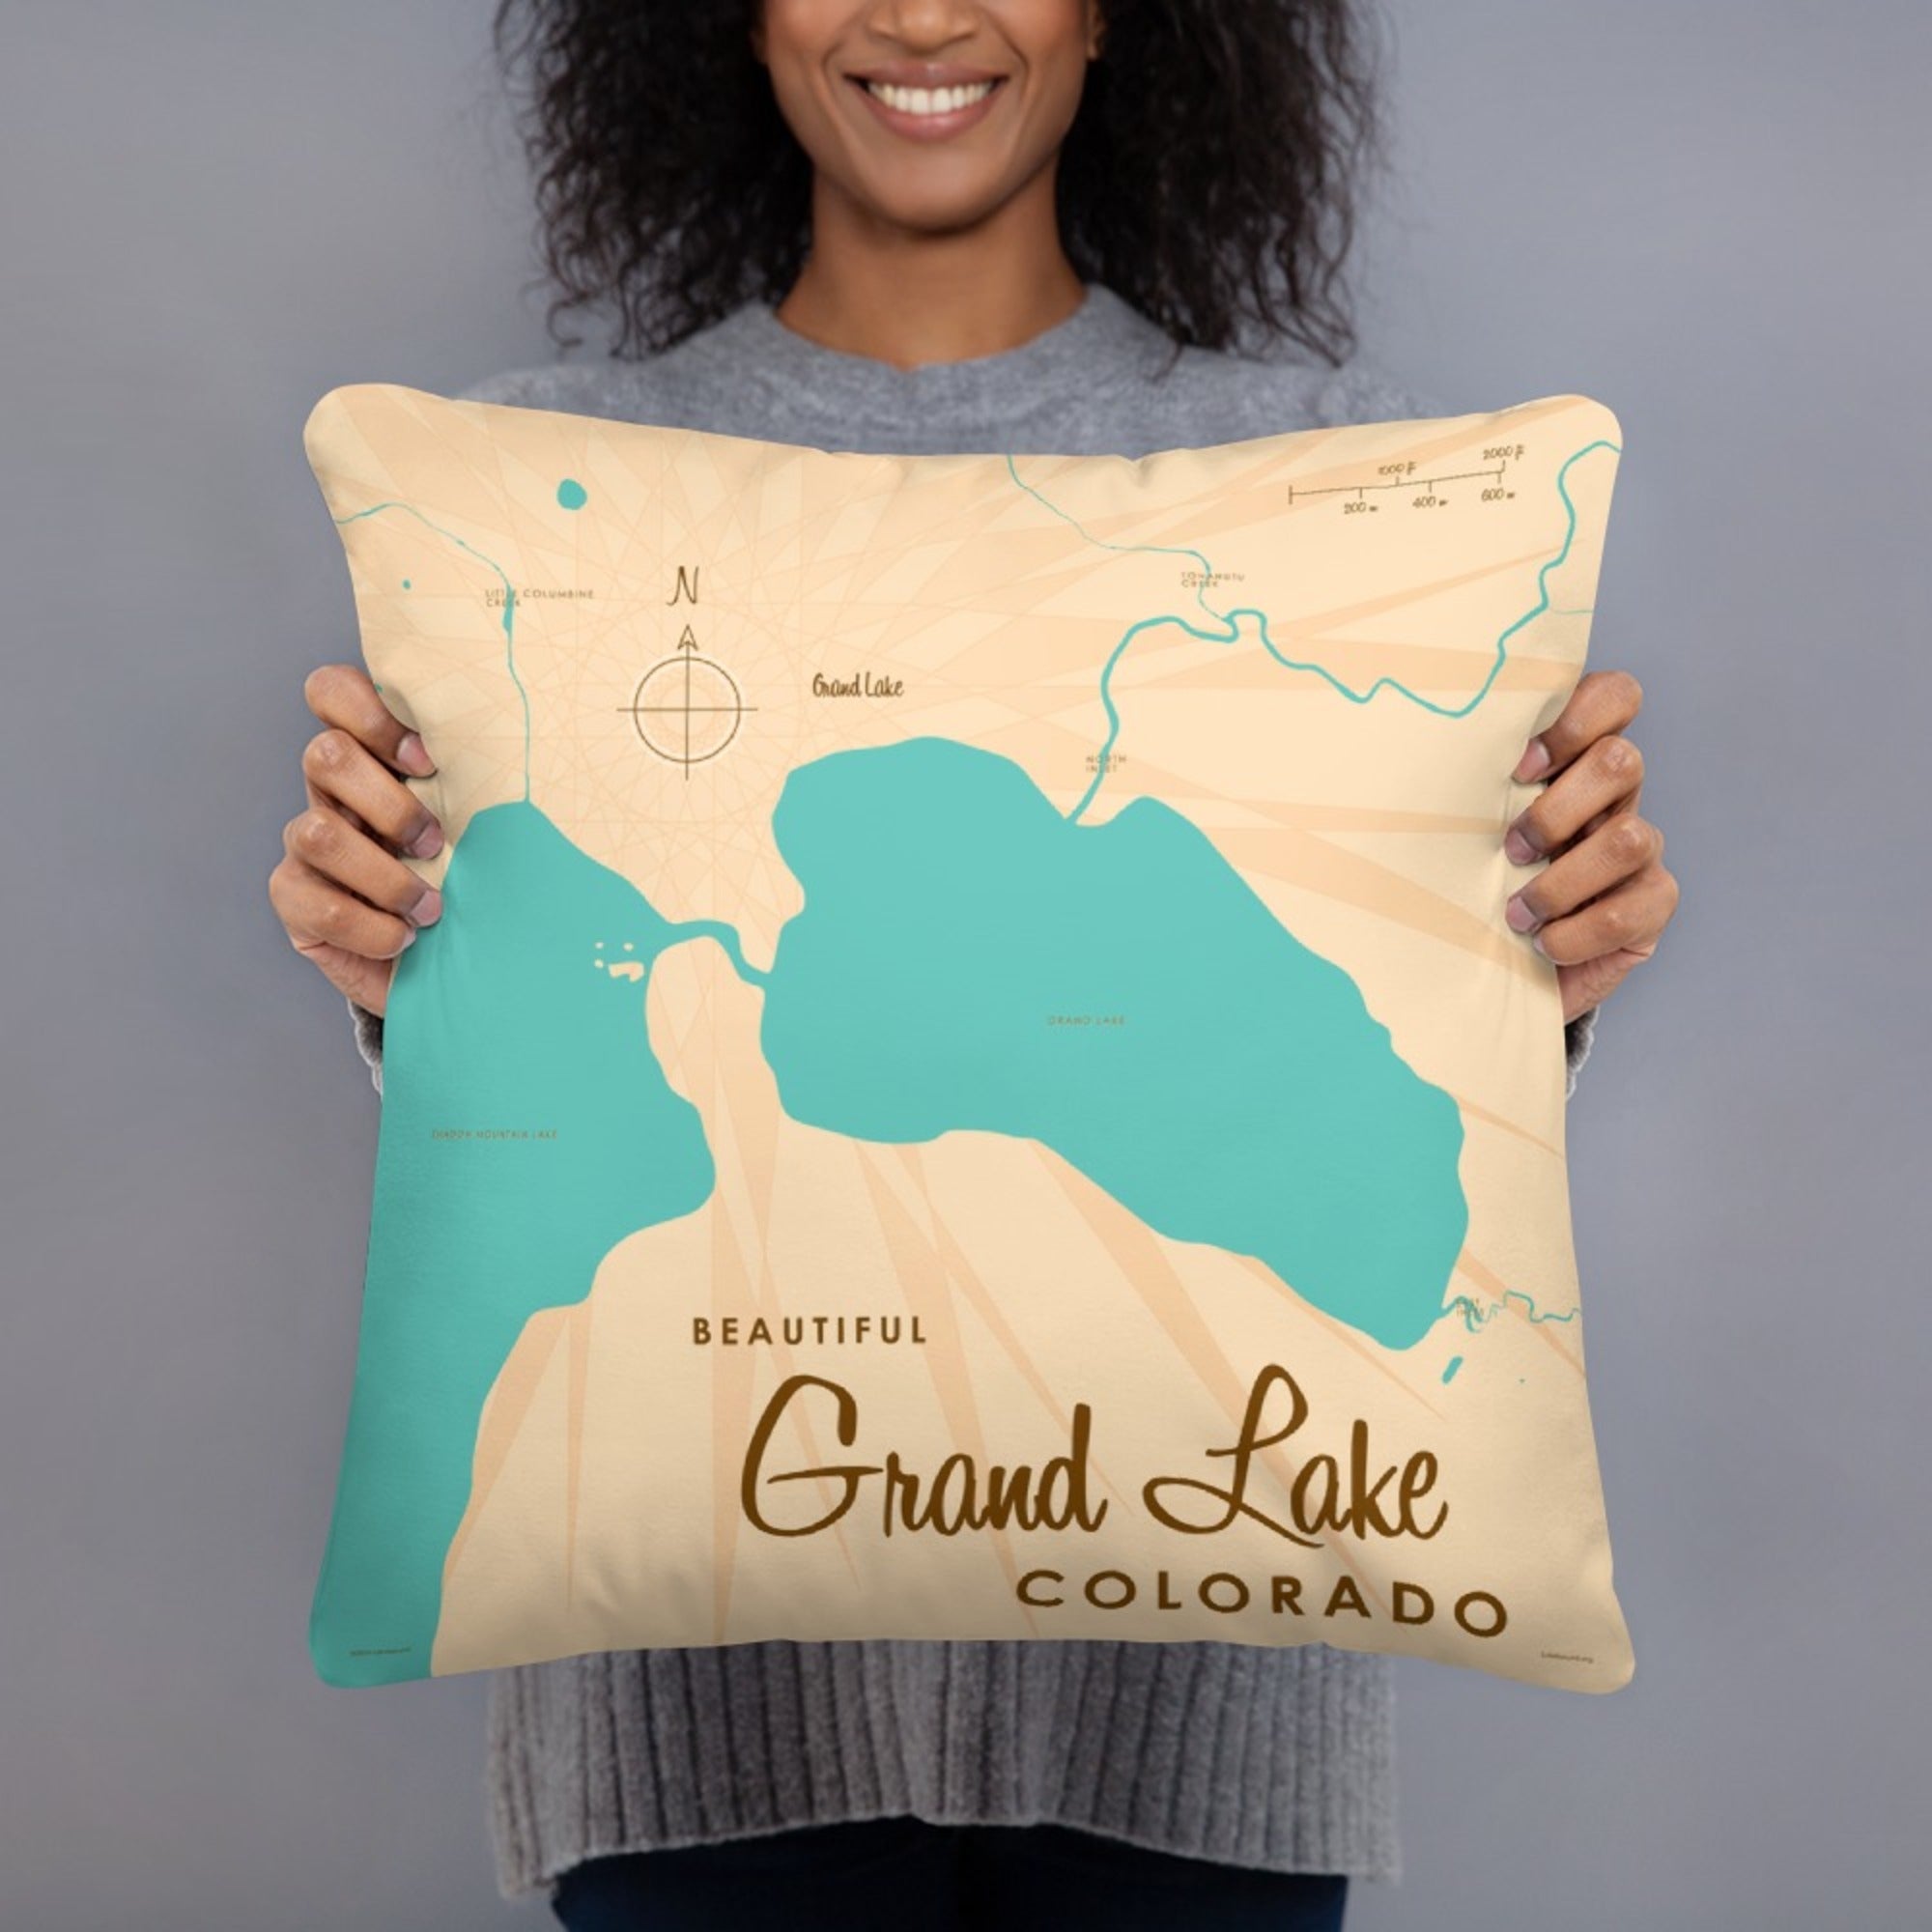 Grand Lake Colorado Pillow